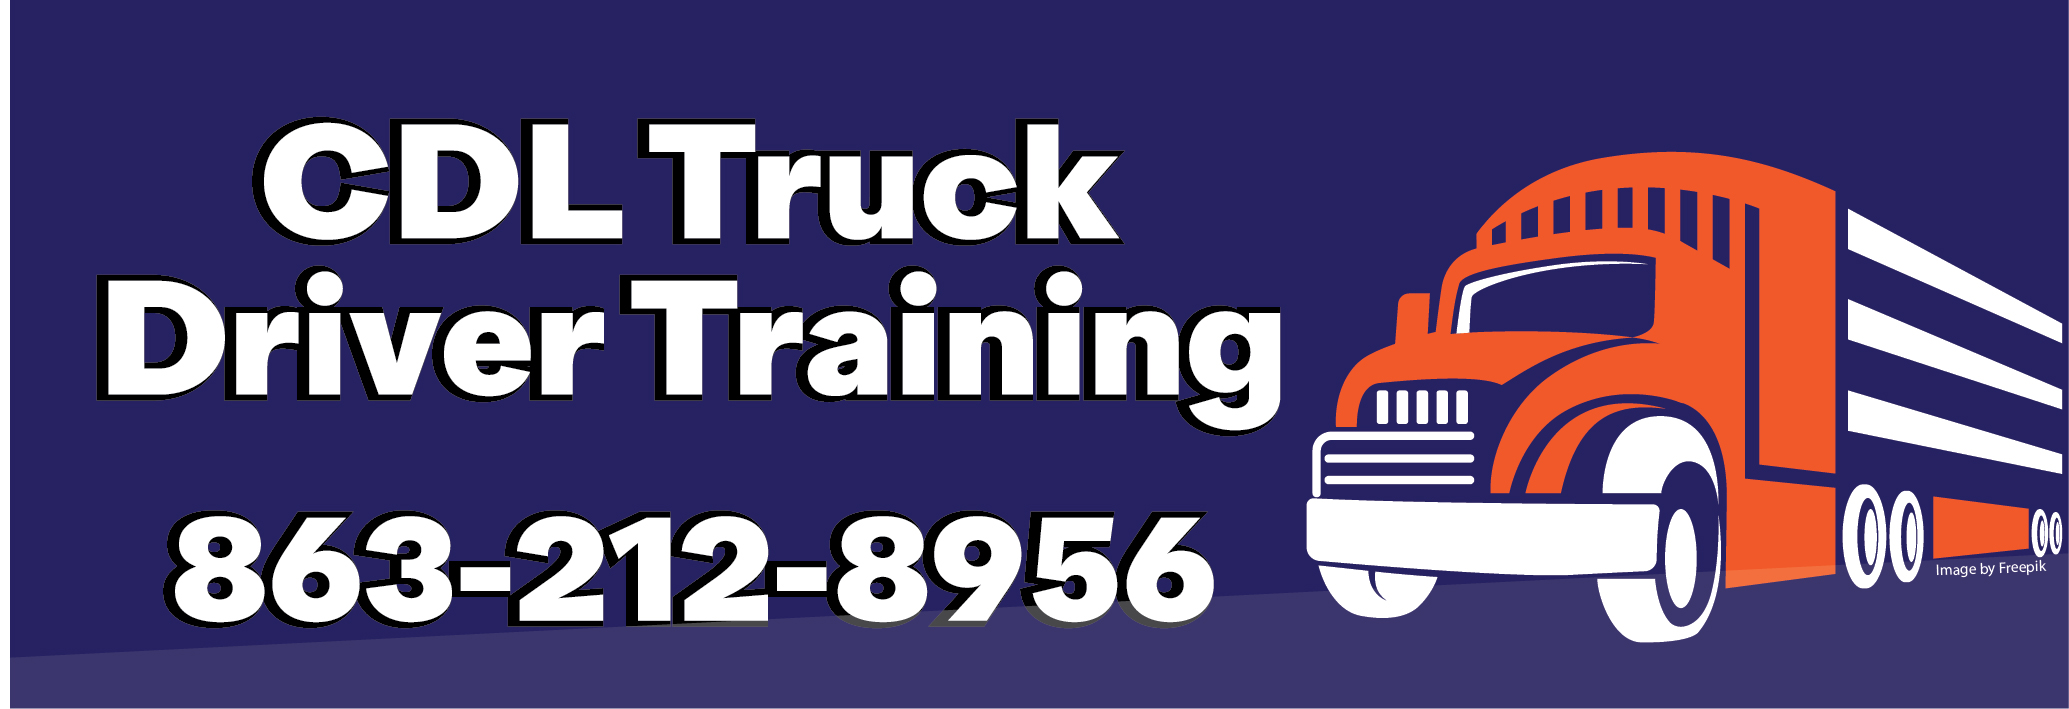 CDL Truck Driver Training: 863-212-8956